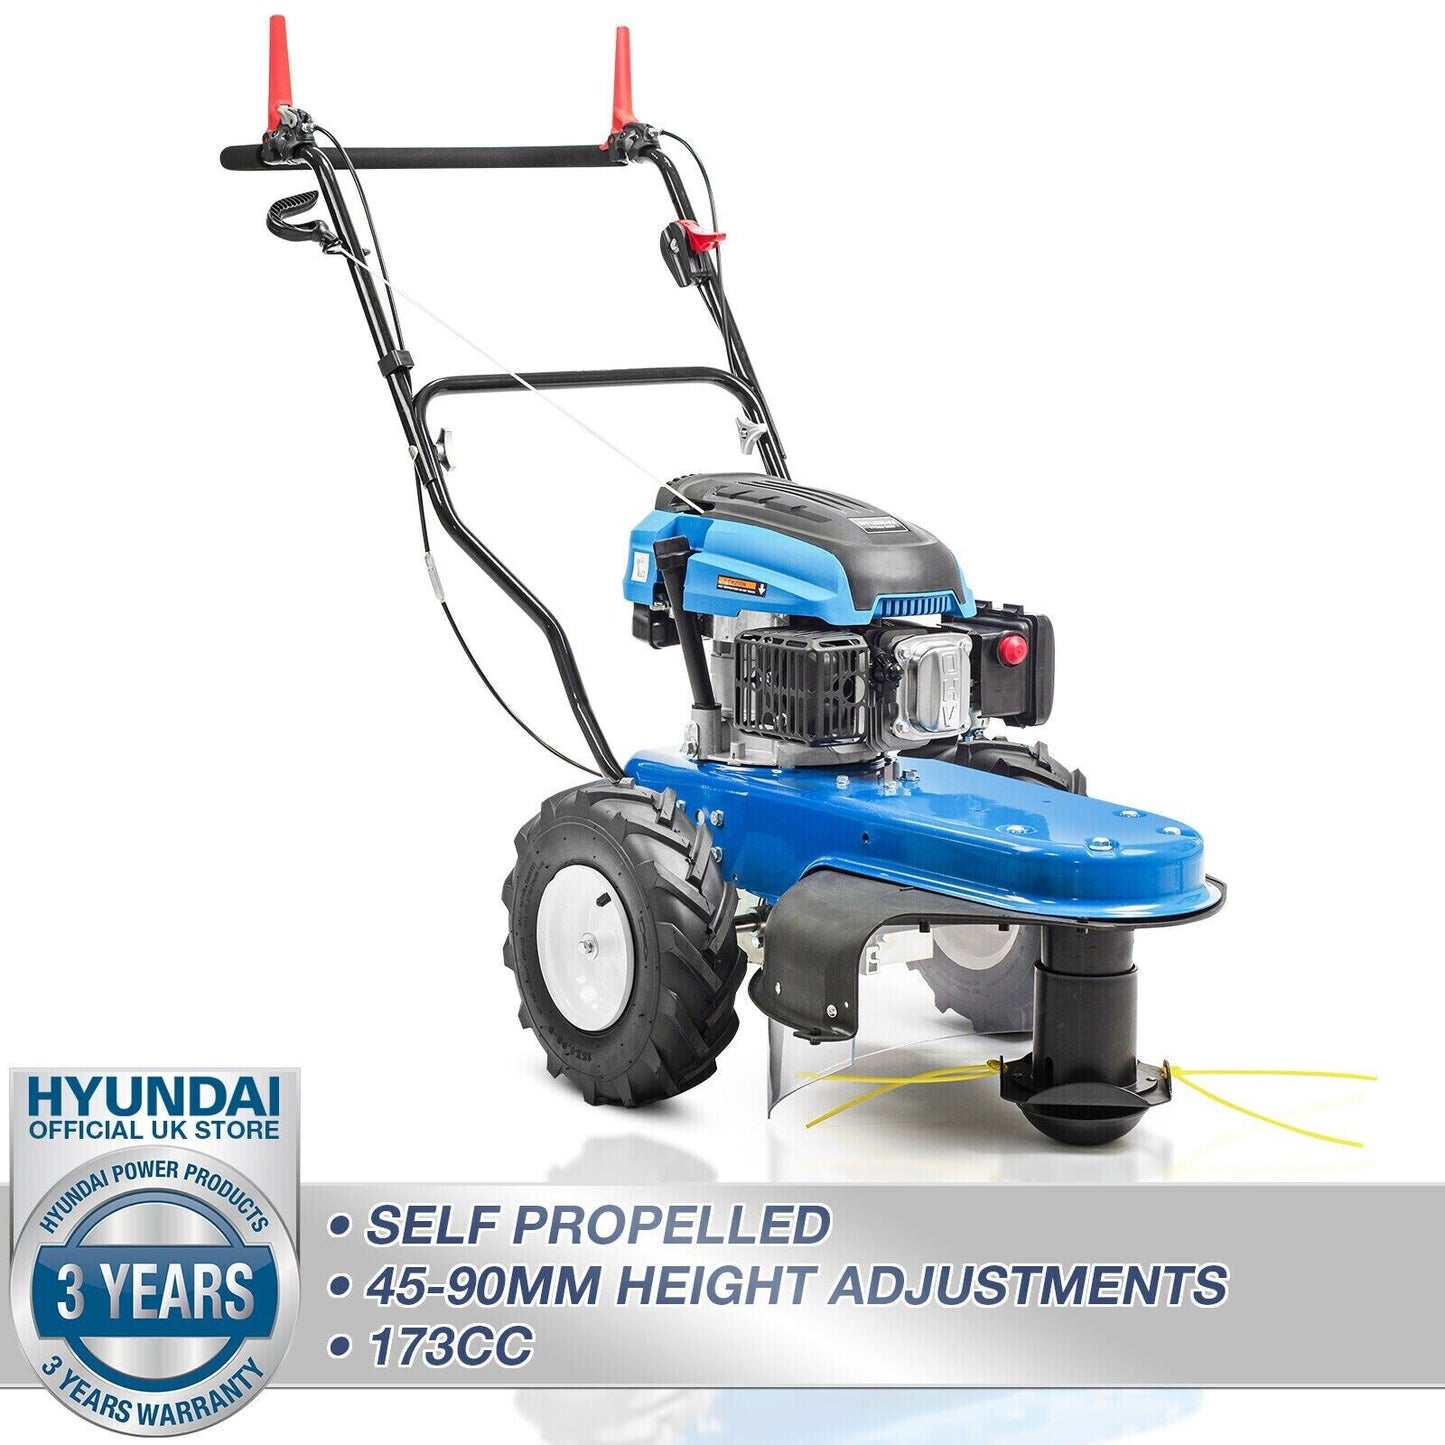 Hyundai Petrol Trimmer 5.5hp Heavy Duty Self Propelled Wheeled Garden Strimmer